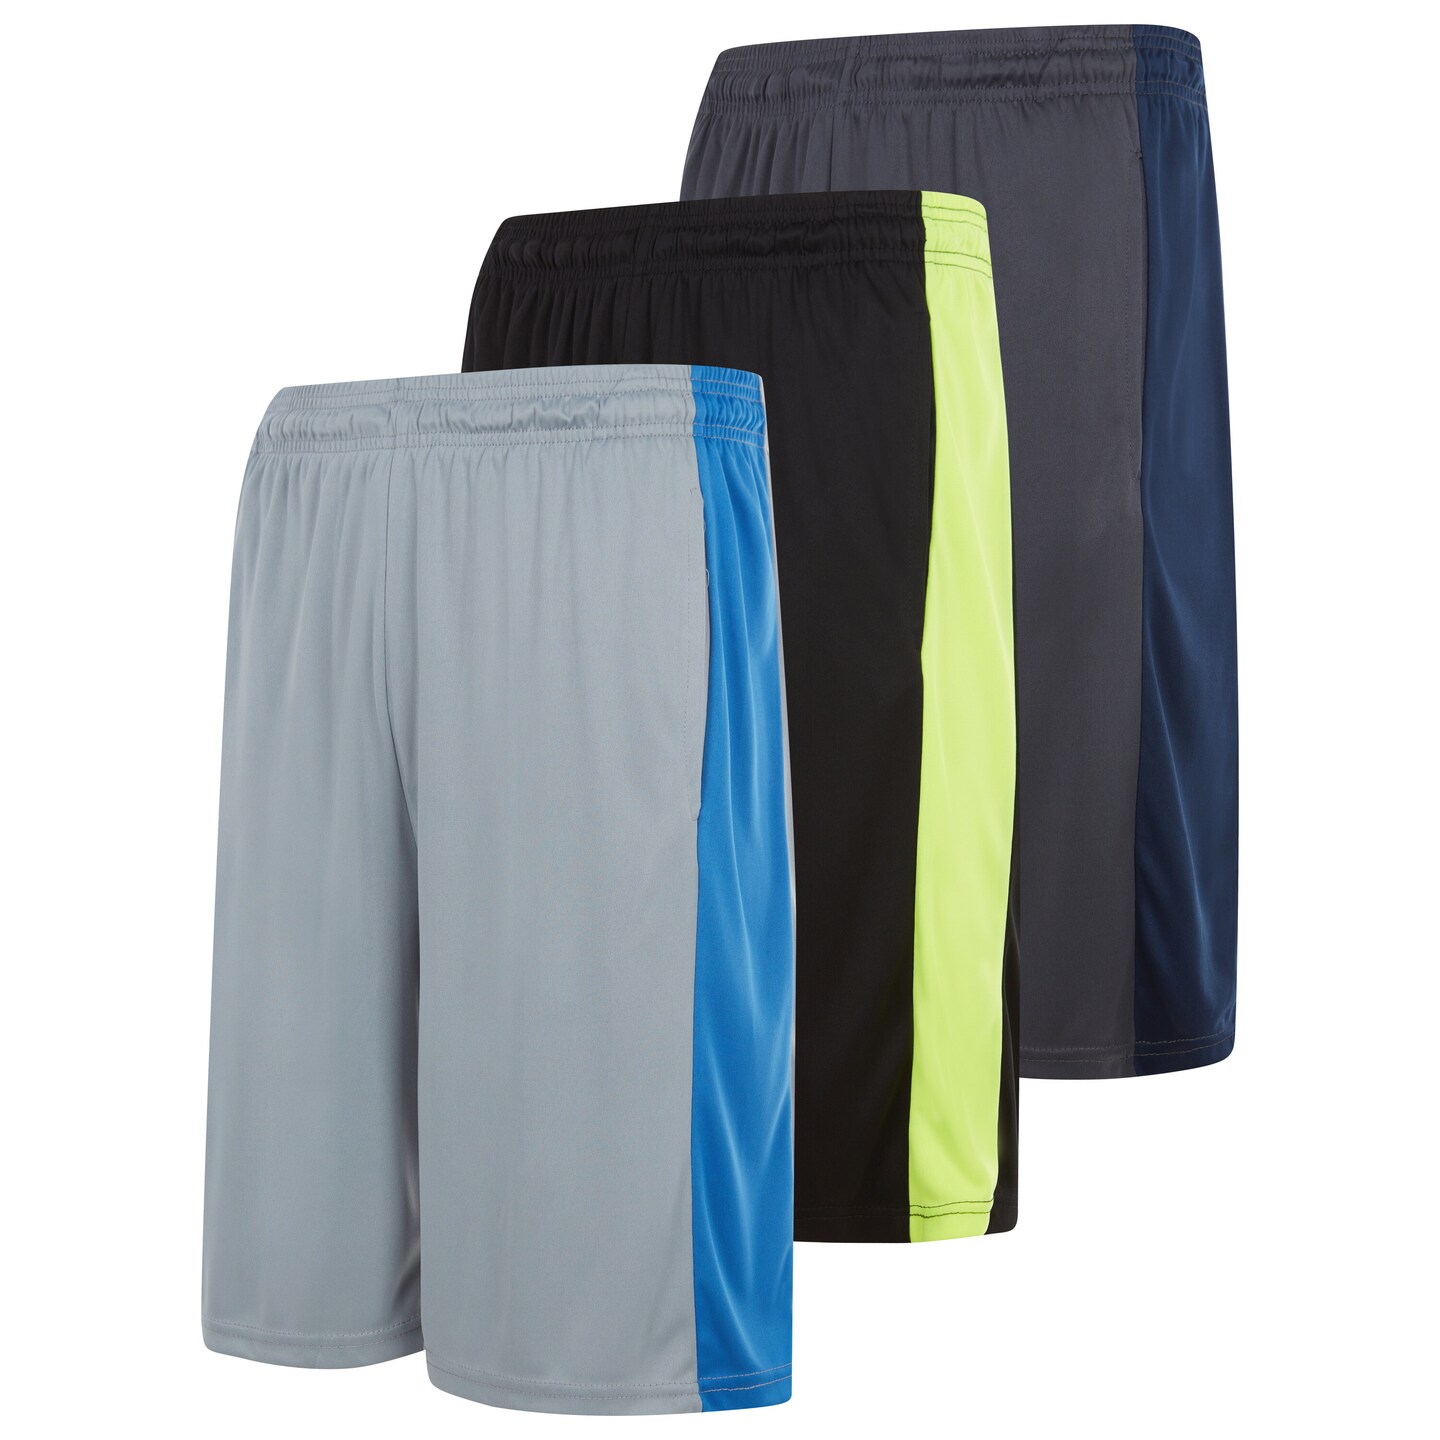 DARESAY Men's Dry-Fit Sweat-Resistant Active Athletic Shorts